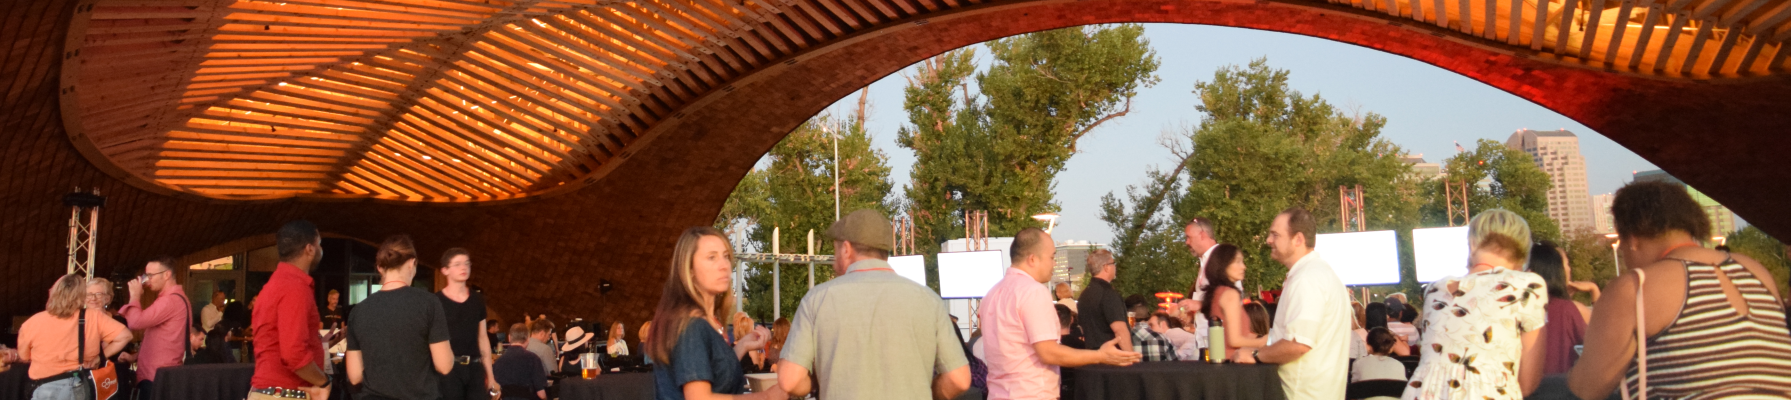 Tedx演讲在谷仓拍摄的居民站在拱门下